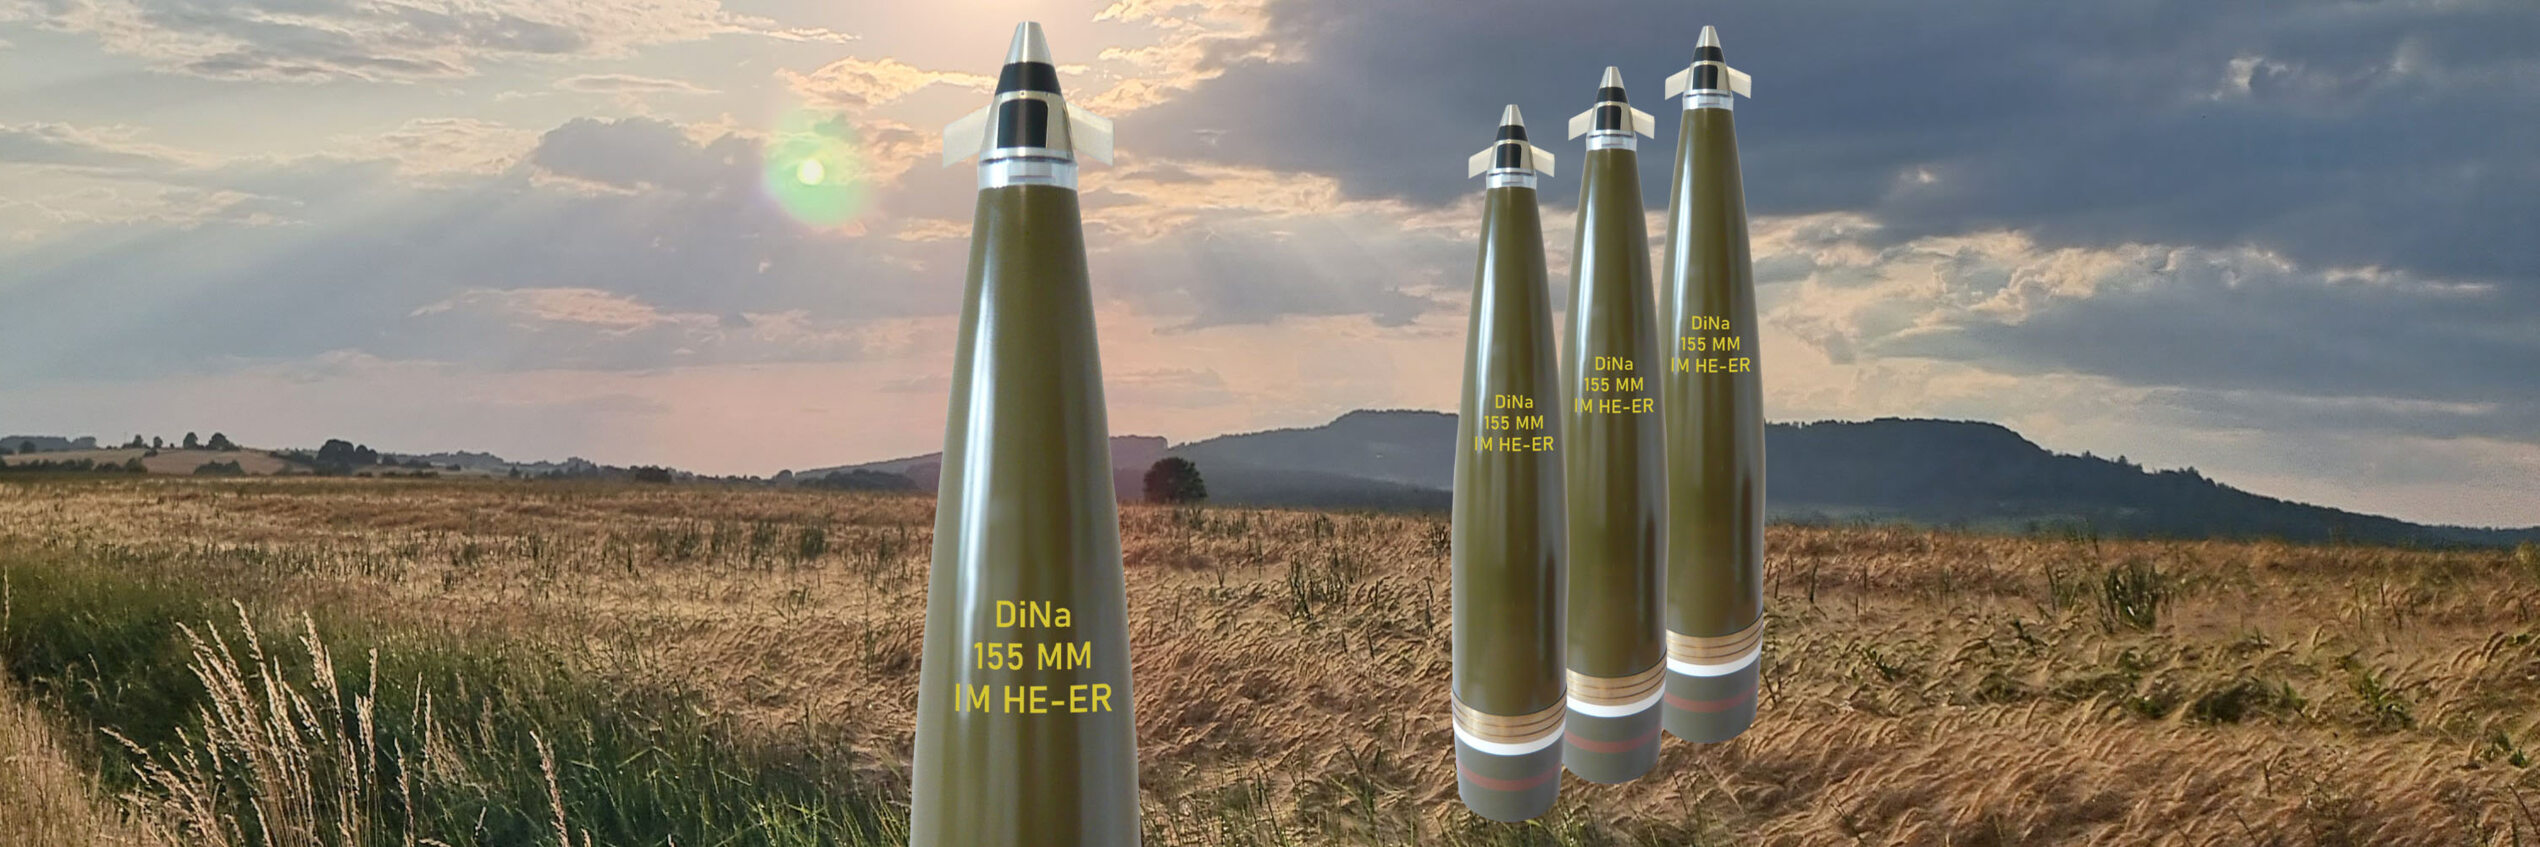 Germany procures 155mm artillery ammunition